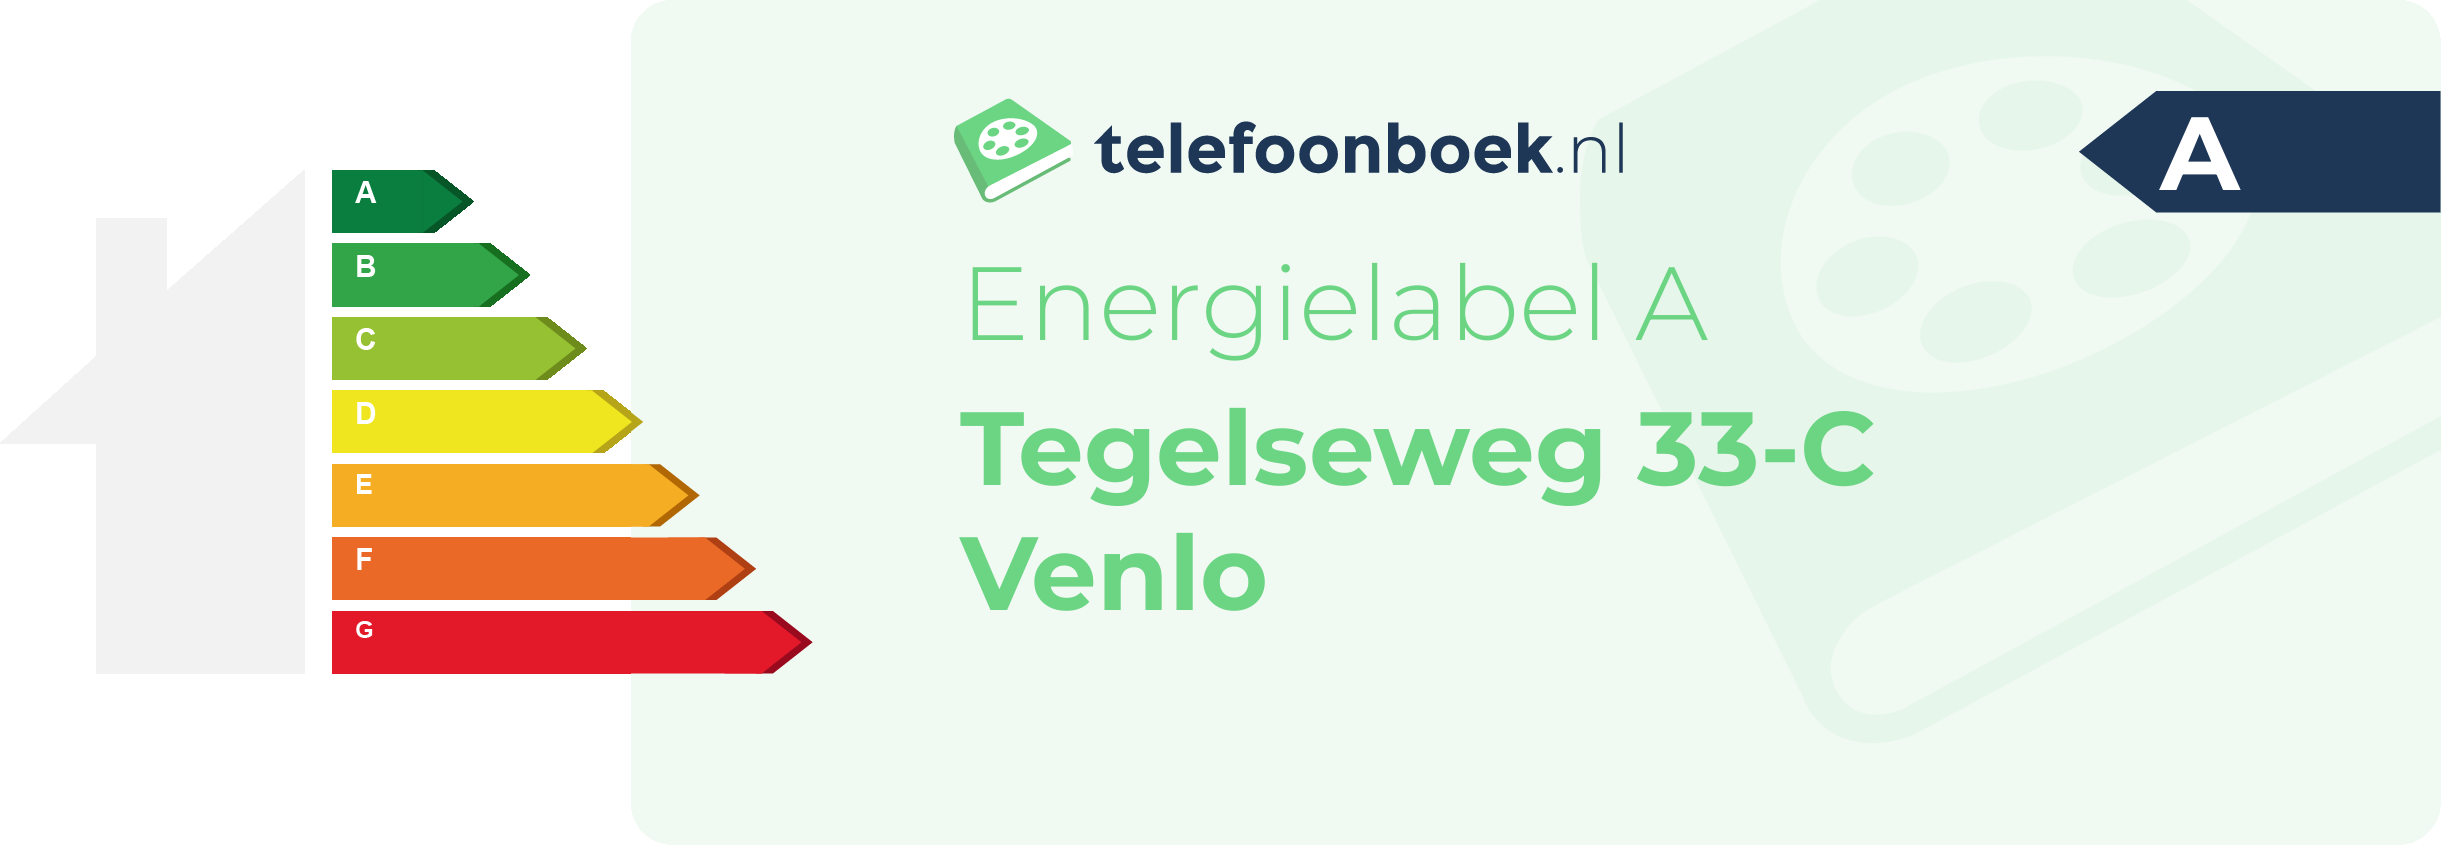 Energielabel Tegelseweg 33-C Venlo